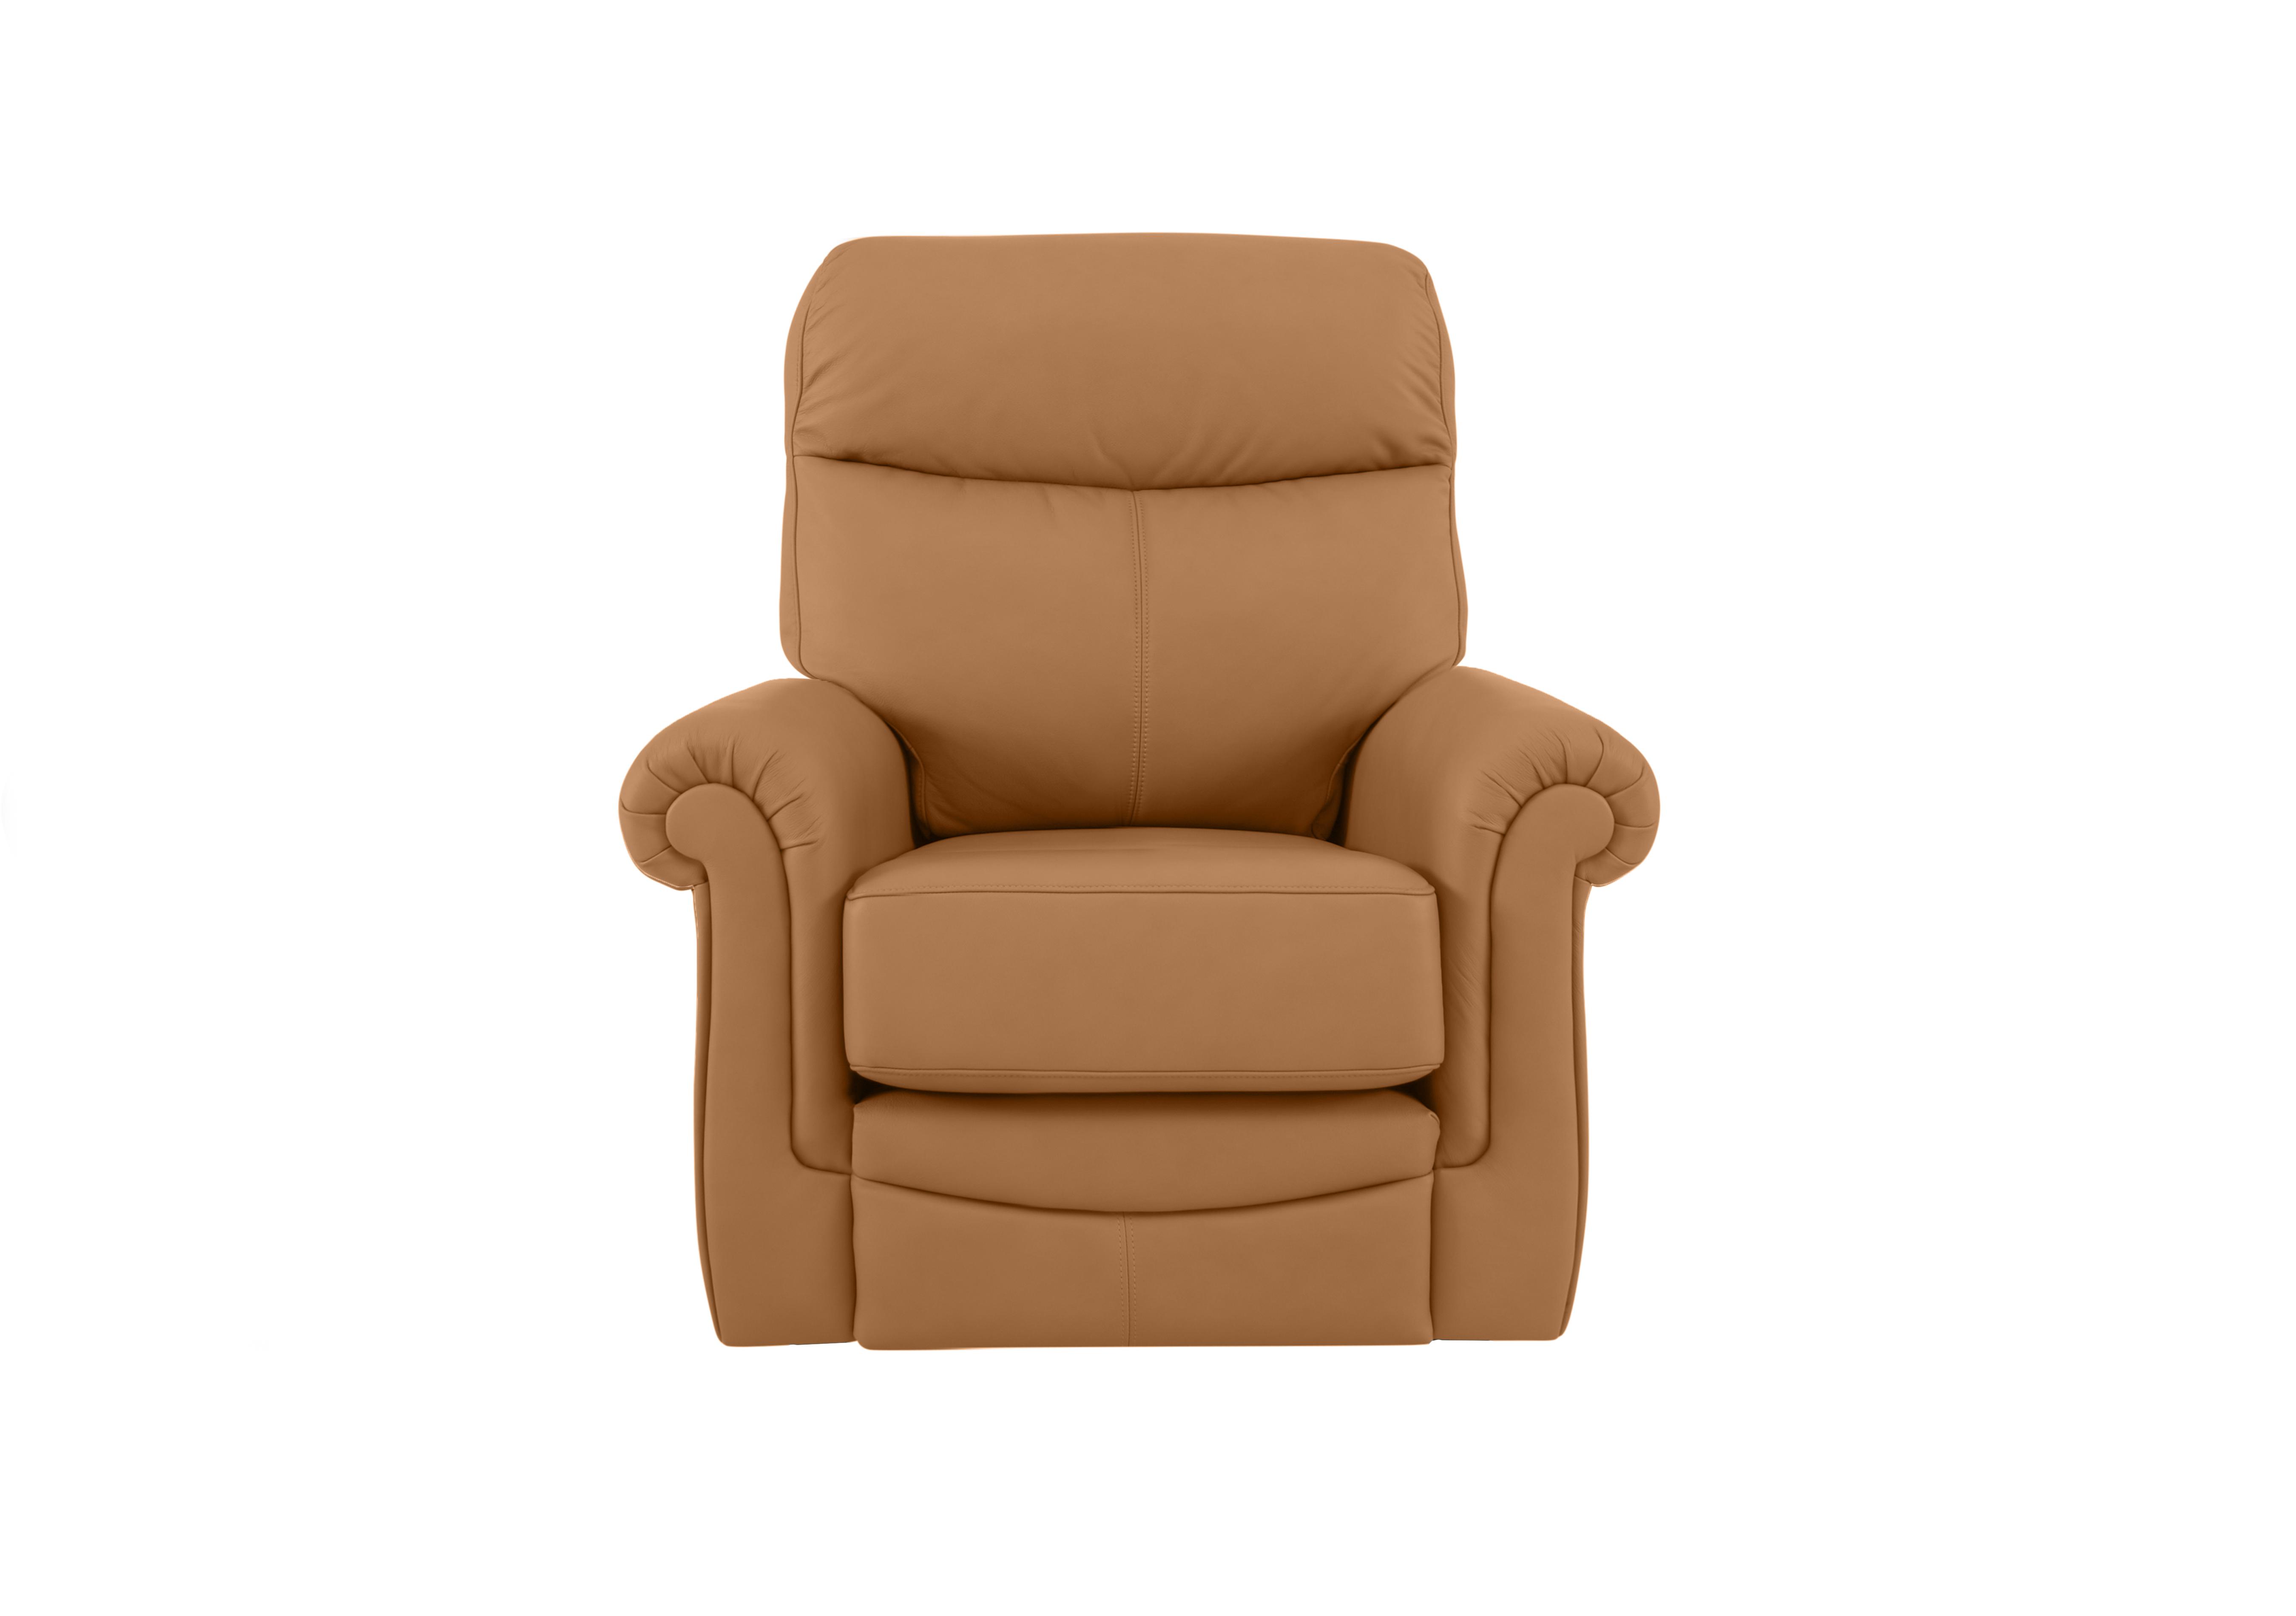 Avon Leather Recliner Armchair in L847 Cambridge Tan on Furniture Village